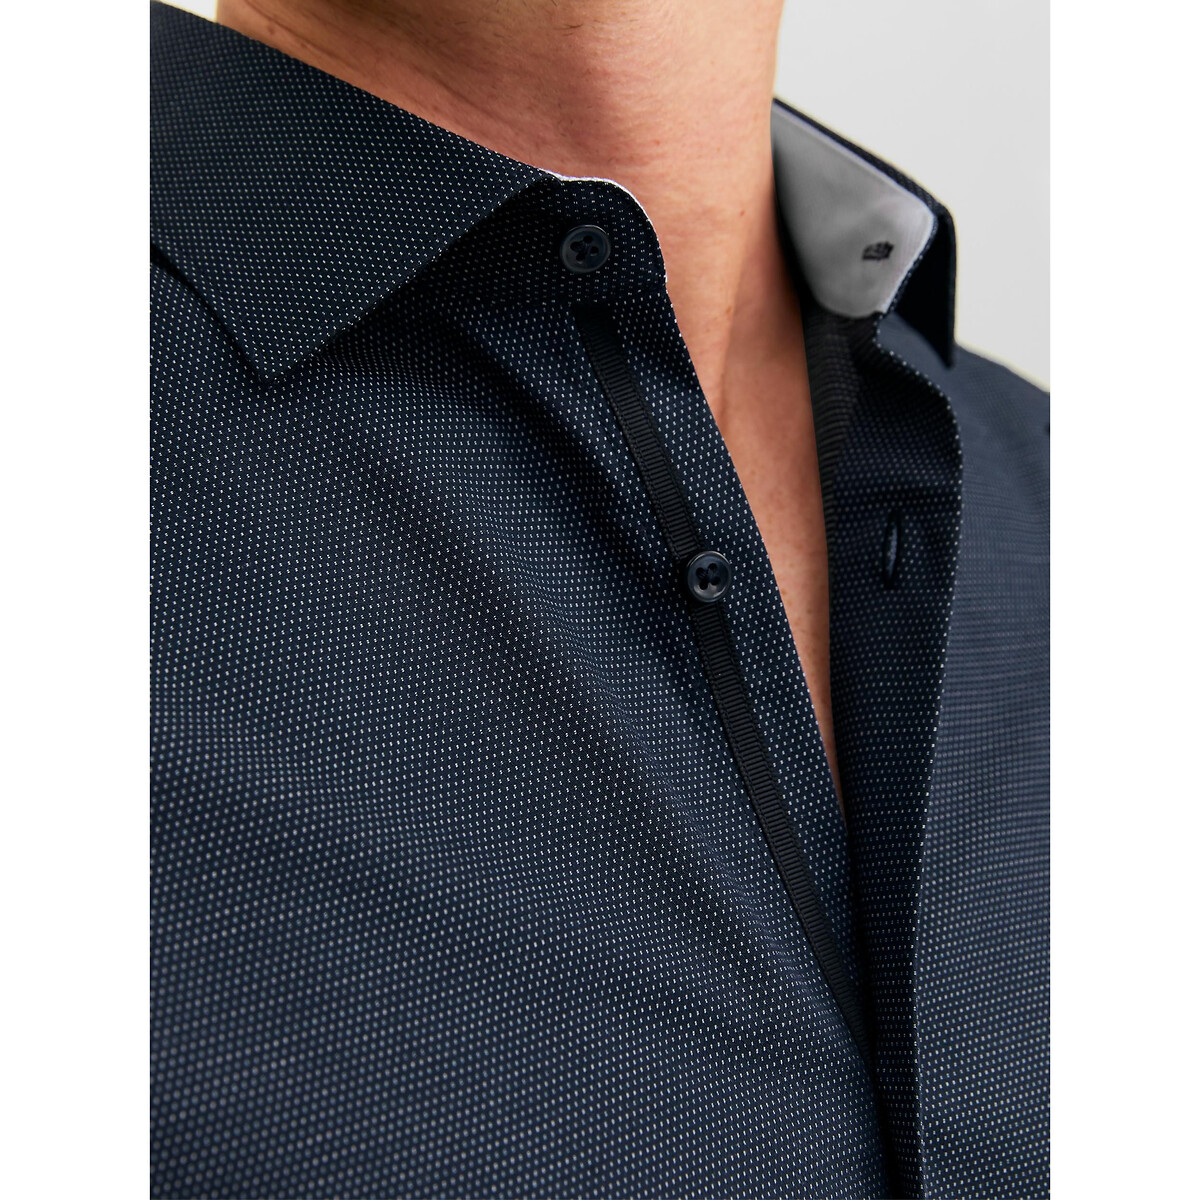 Рубашка Слим из ткани стрейч M синий LaRedoute, размер M - фото 3